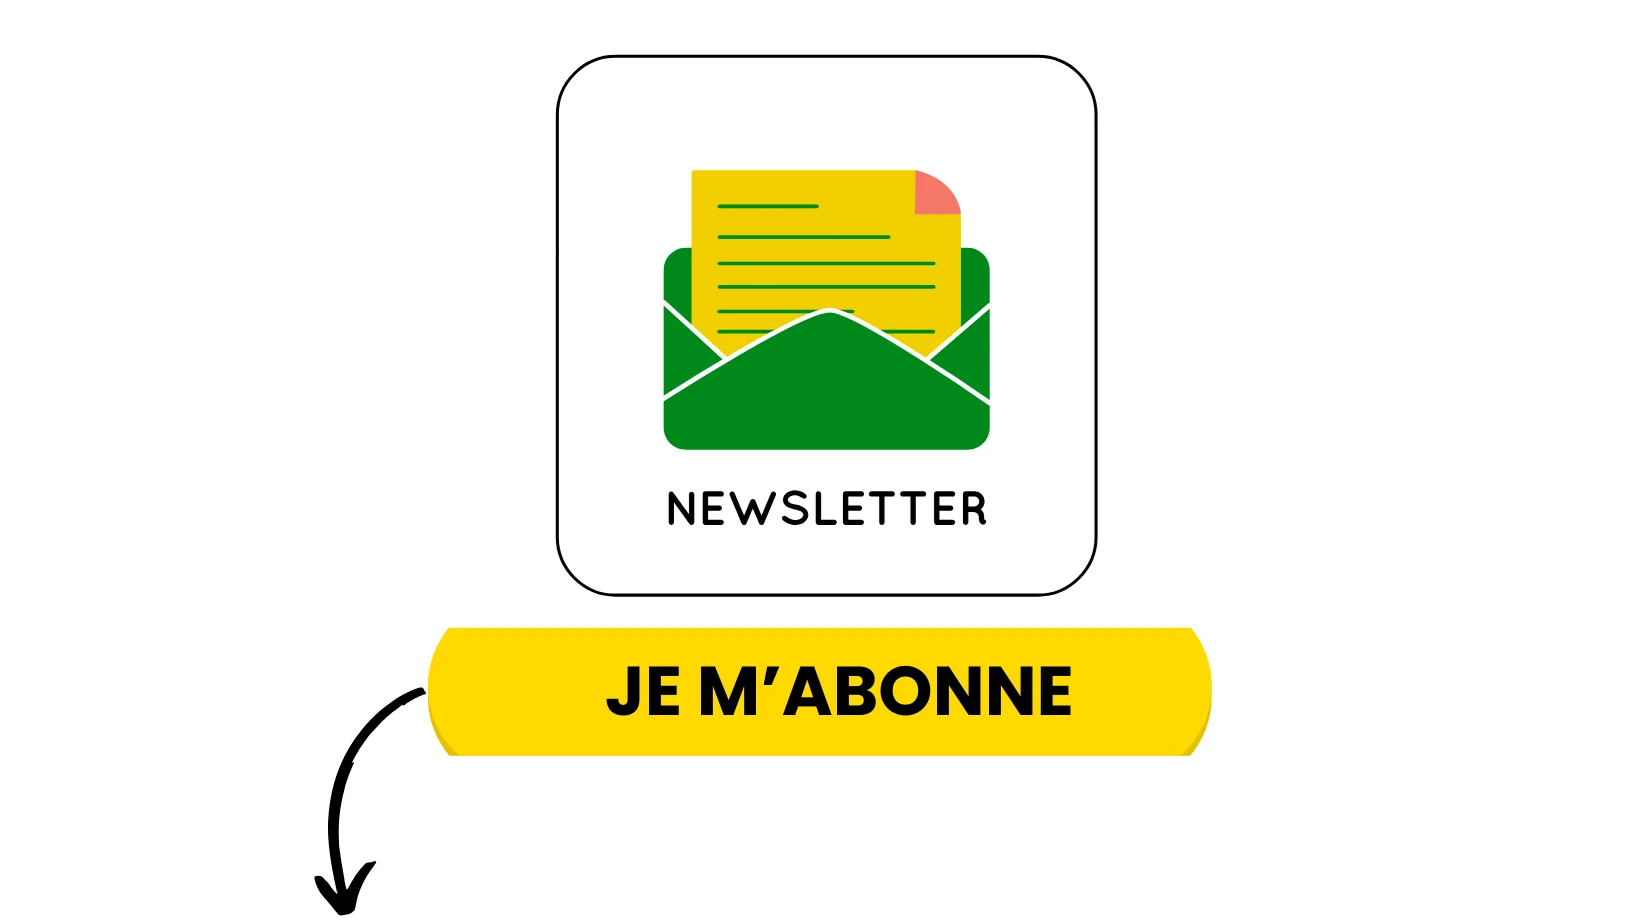 europcar-MARTINIQUE-newsletter-bonsplans